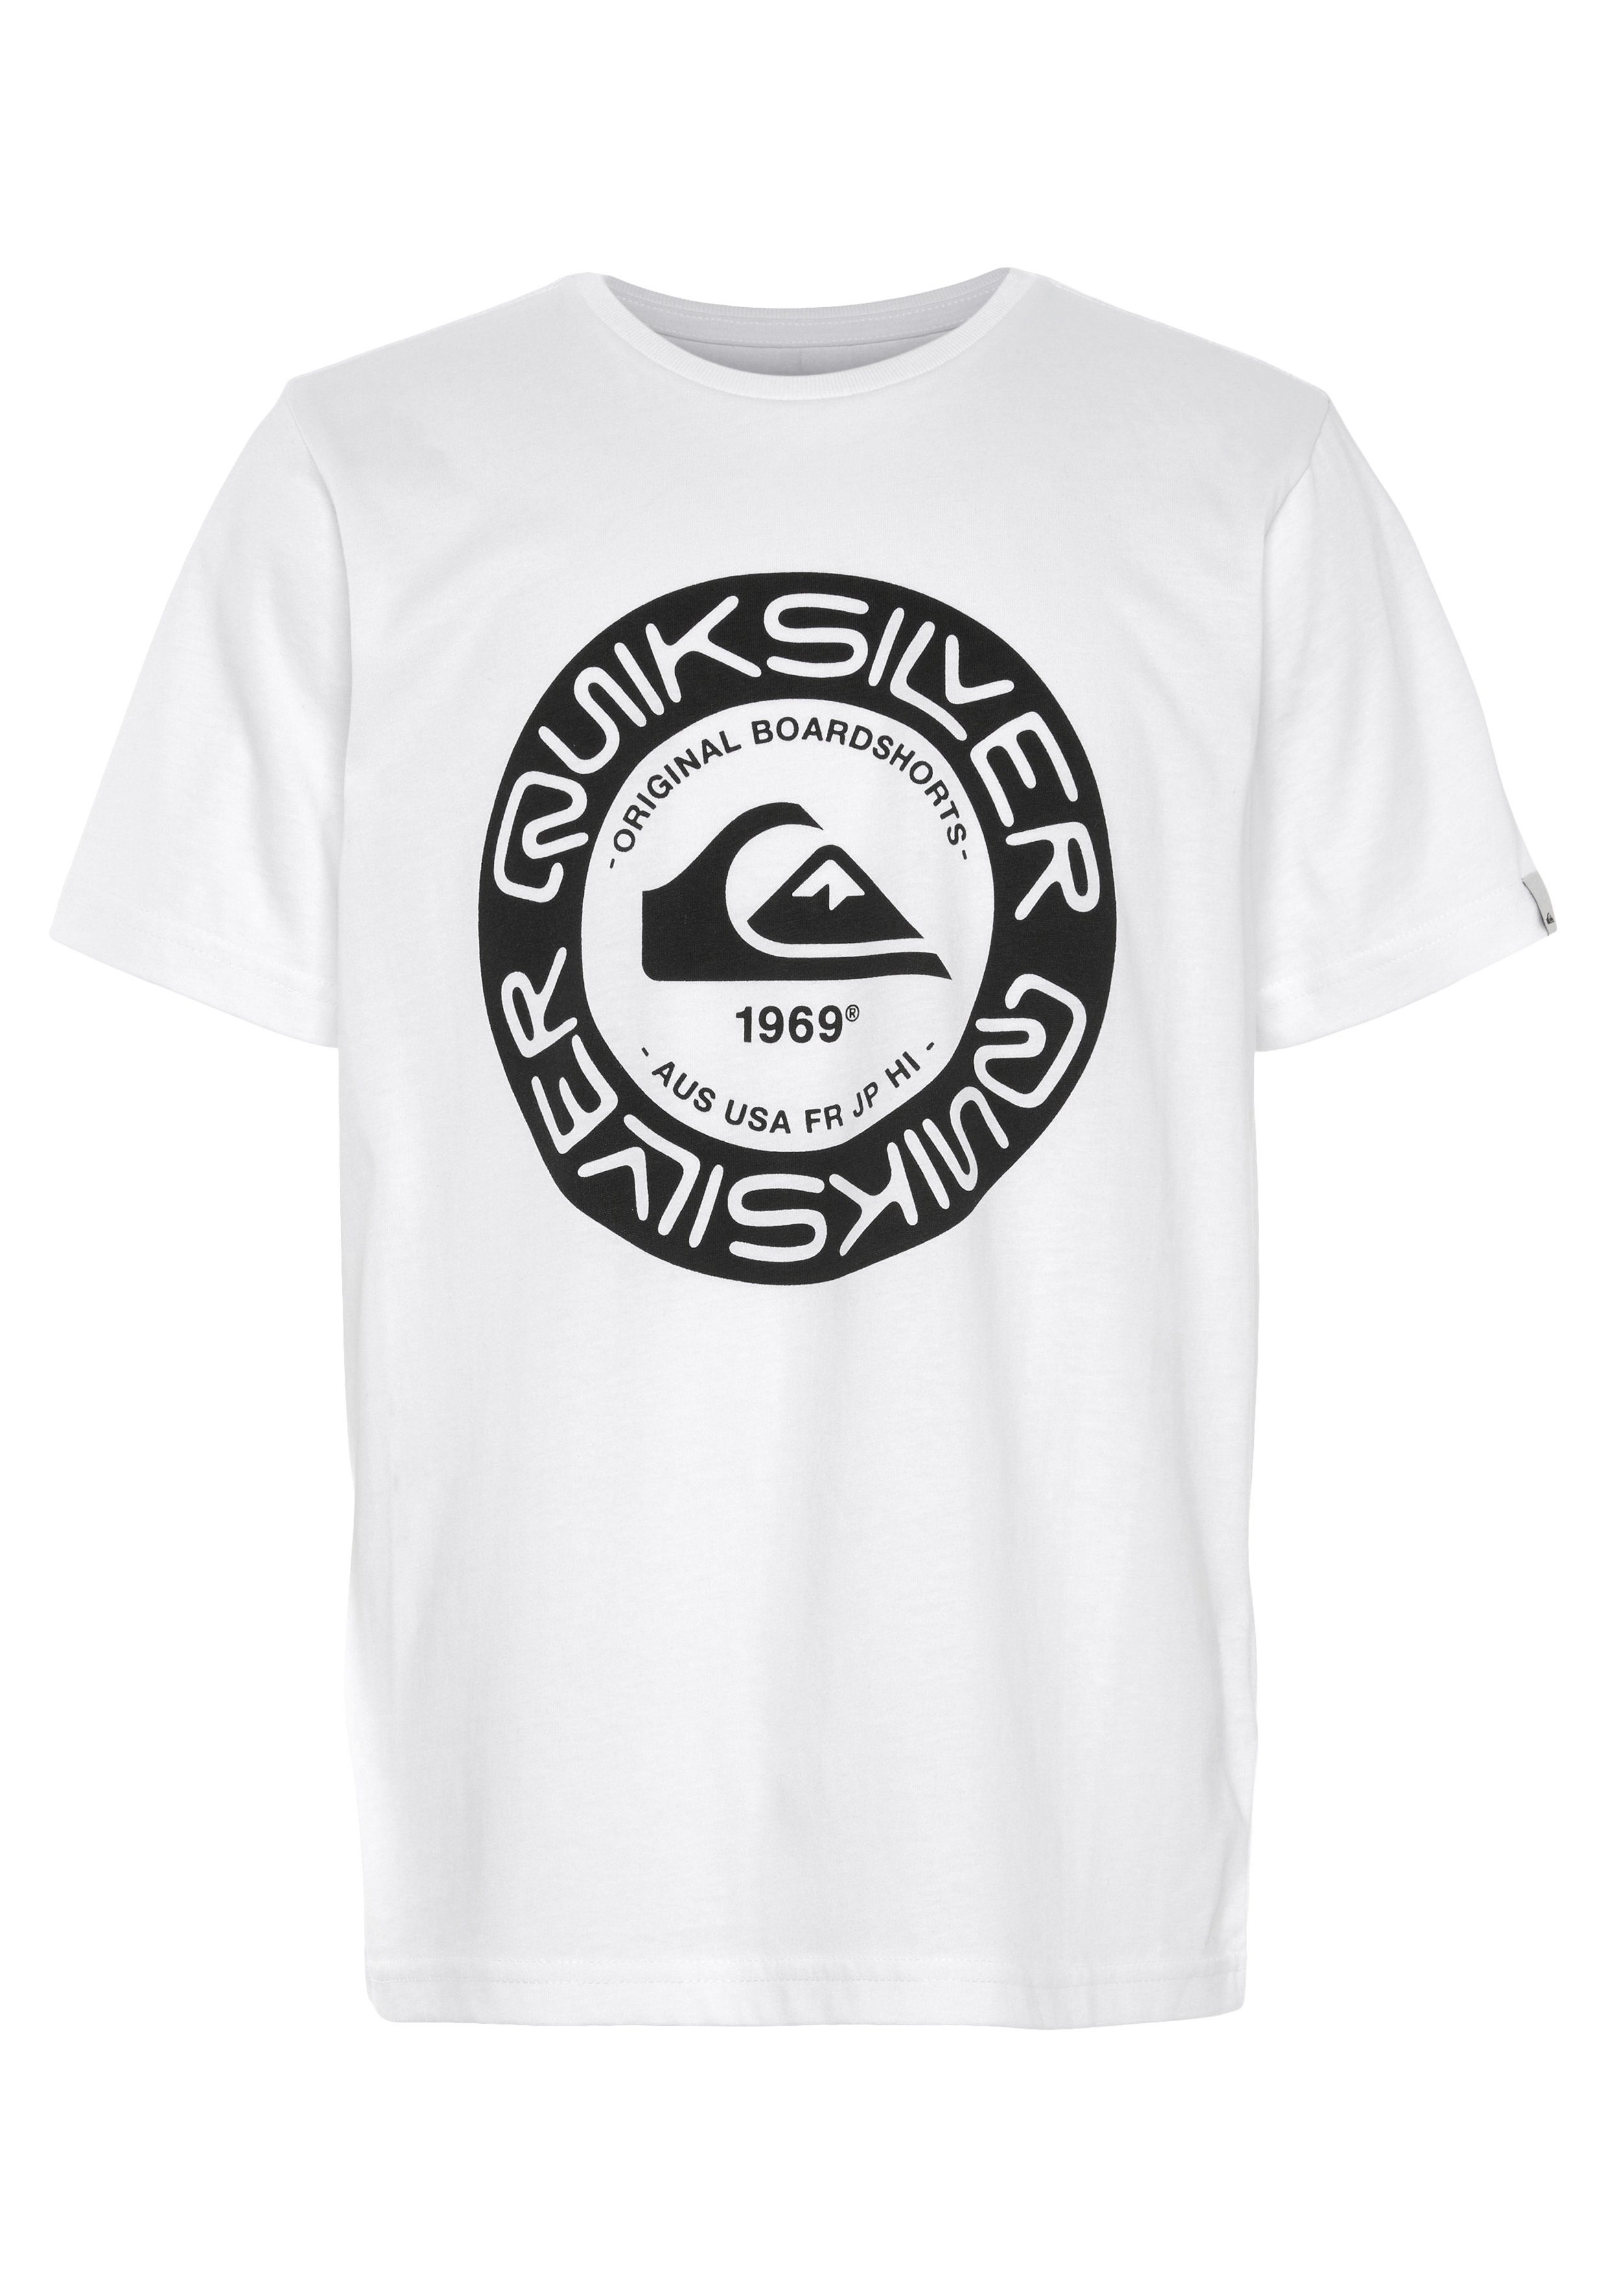 Quiksilver T-Shirt Jungen Doppelpack mit 2-tlg) Logodruck (Packung